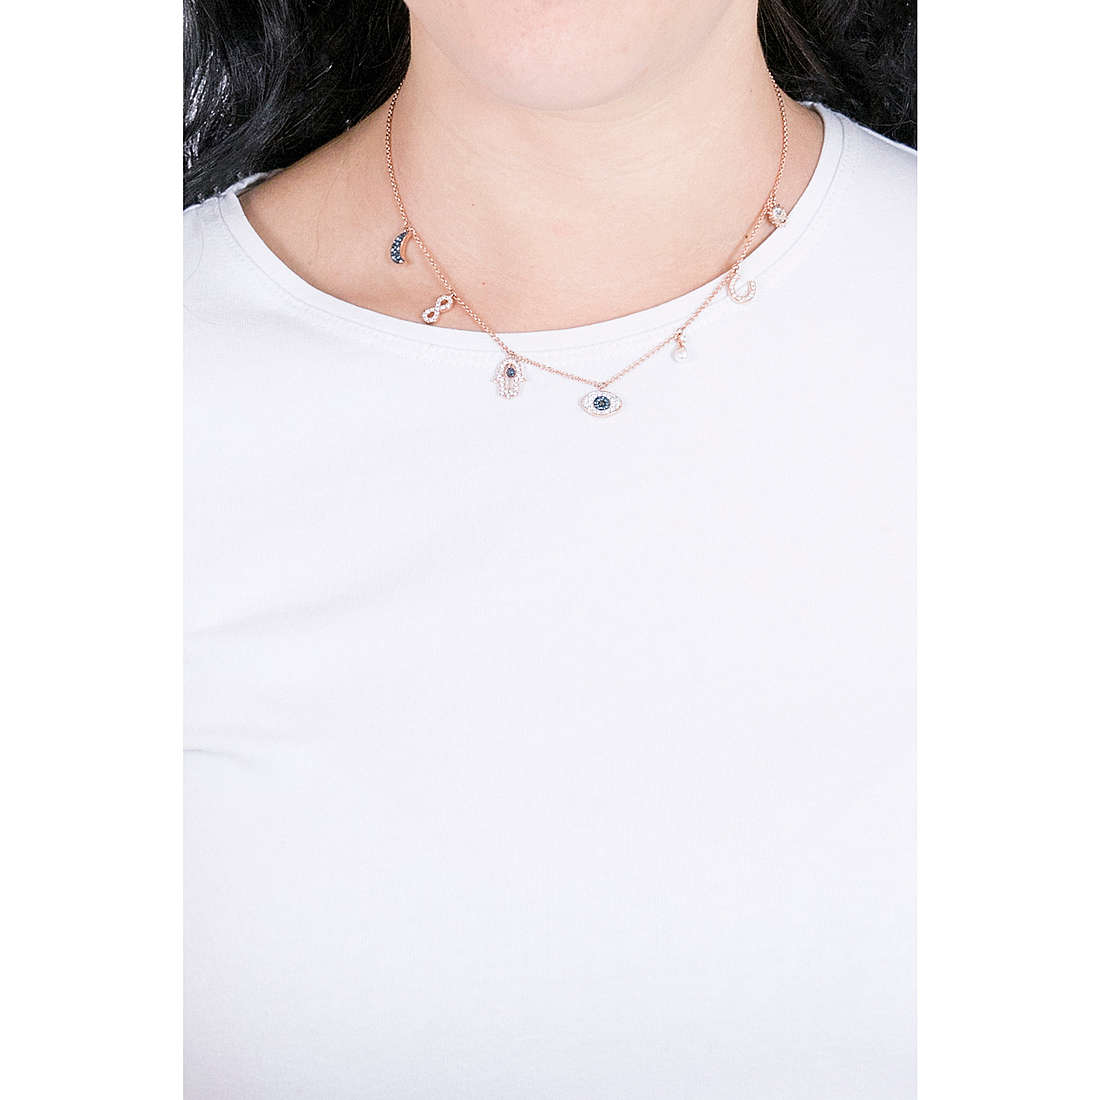 Swarovski necklaces Symbolic woman 5497664 wearing